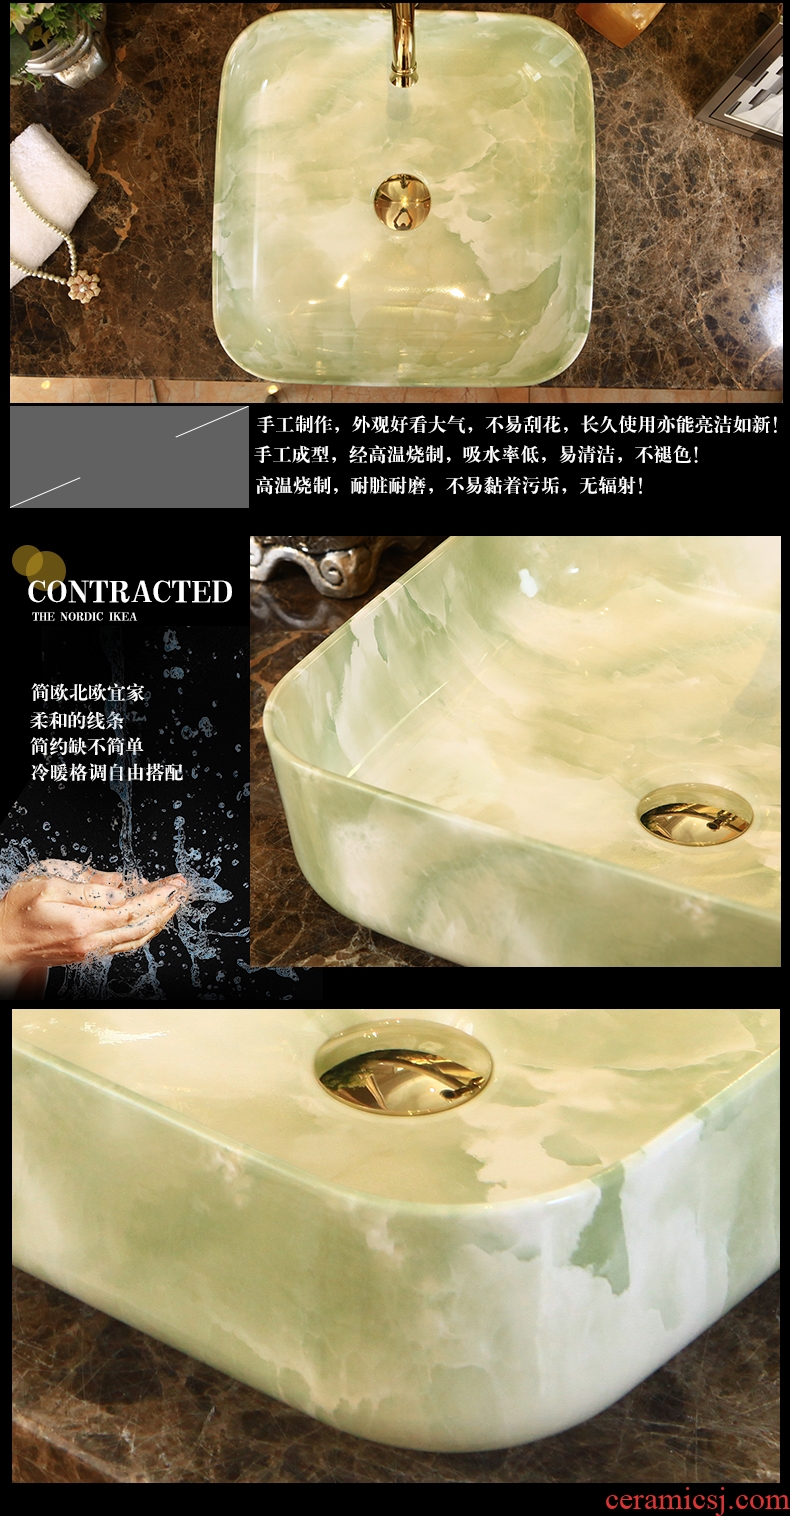 Ling yu ceramic art basin on its square lavabo European - style bathroom sinks marble basin